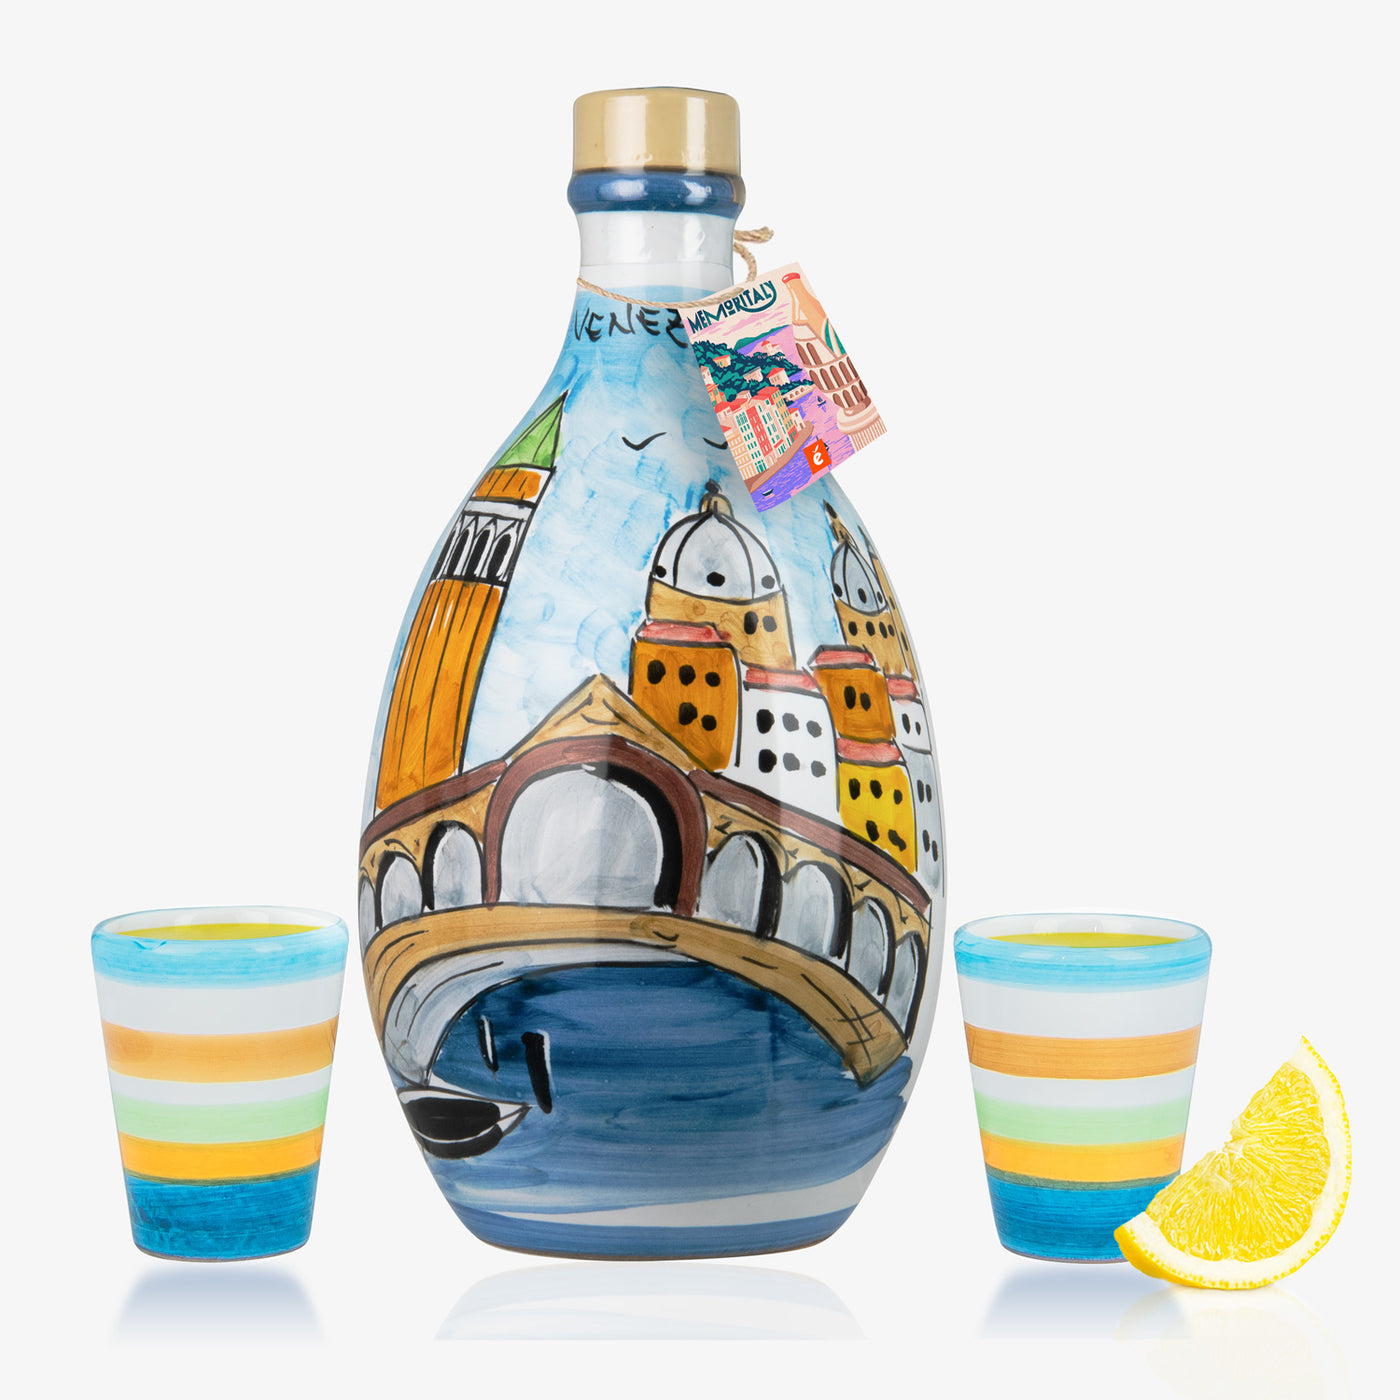 Venezia Handmade Jar Limoncello and Two Glasses: Artisan Limoncello Gift Set